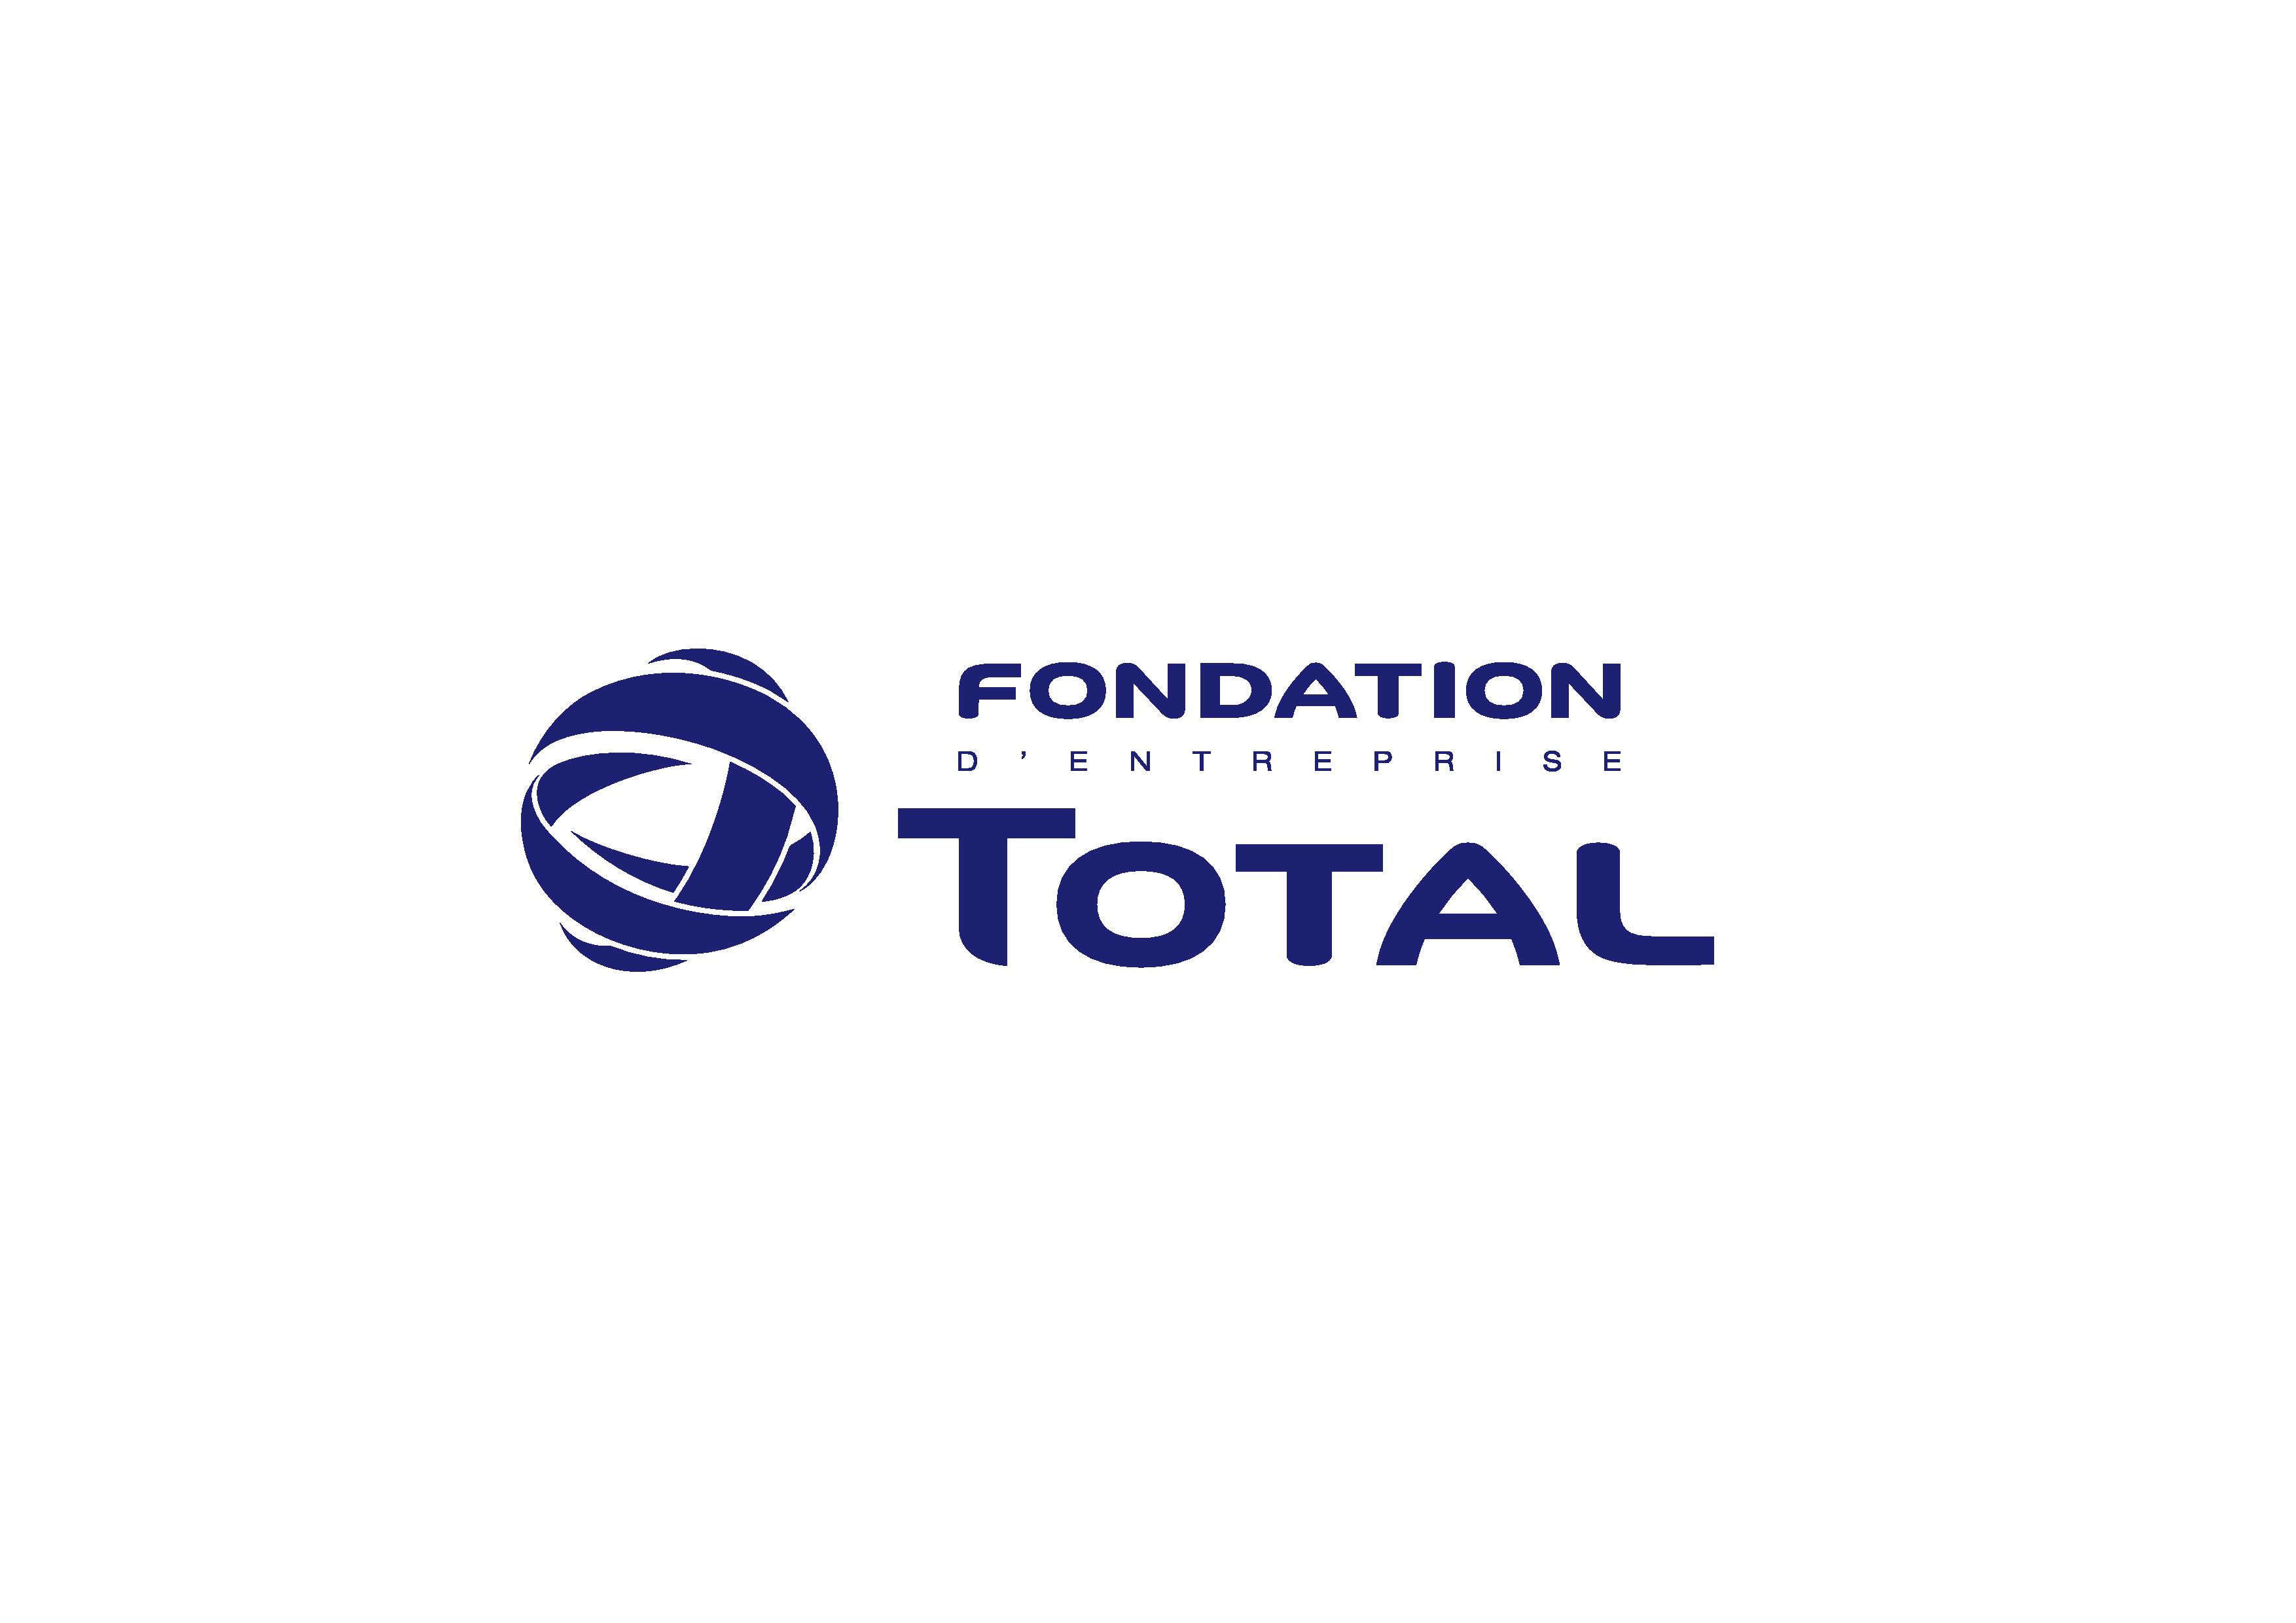 logo_fondation_entreprise_total.jpg